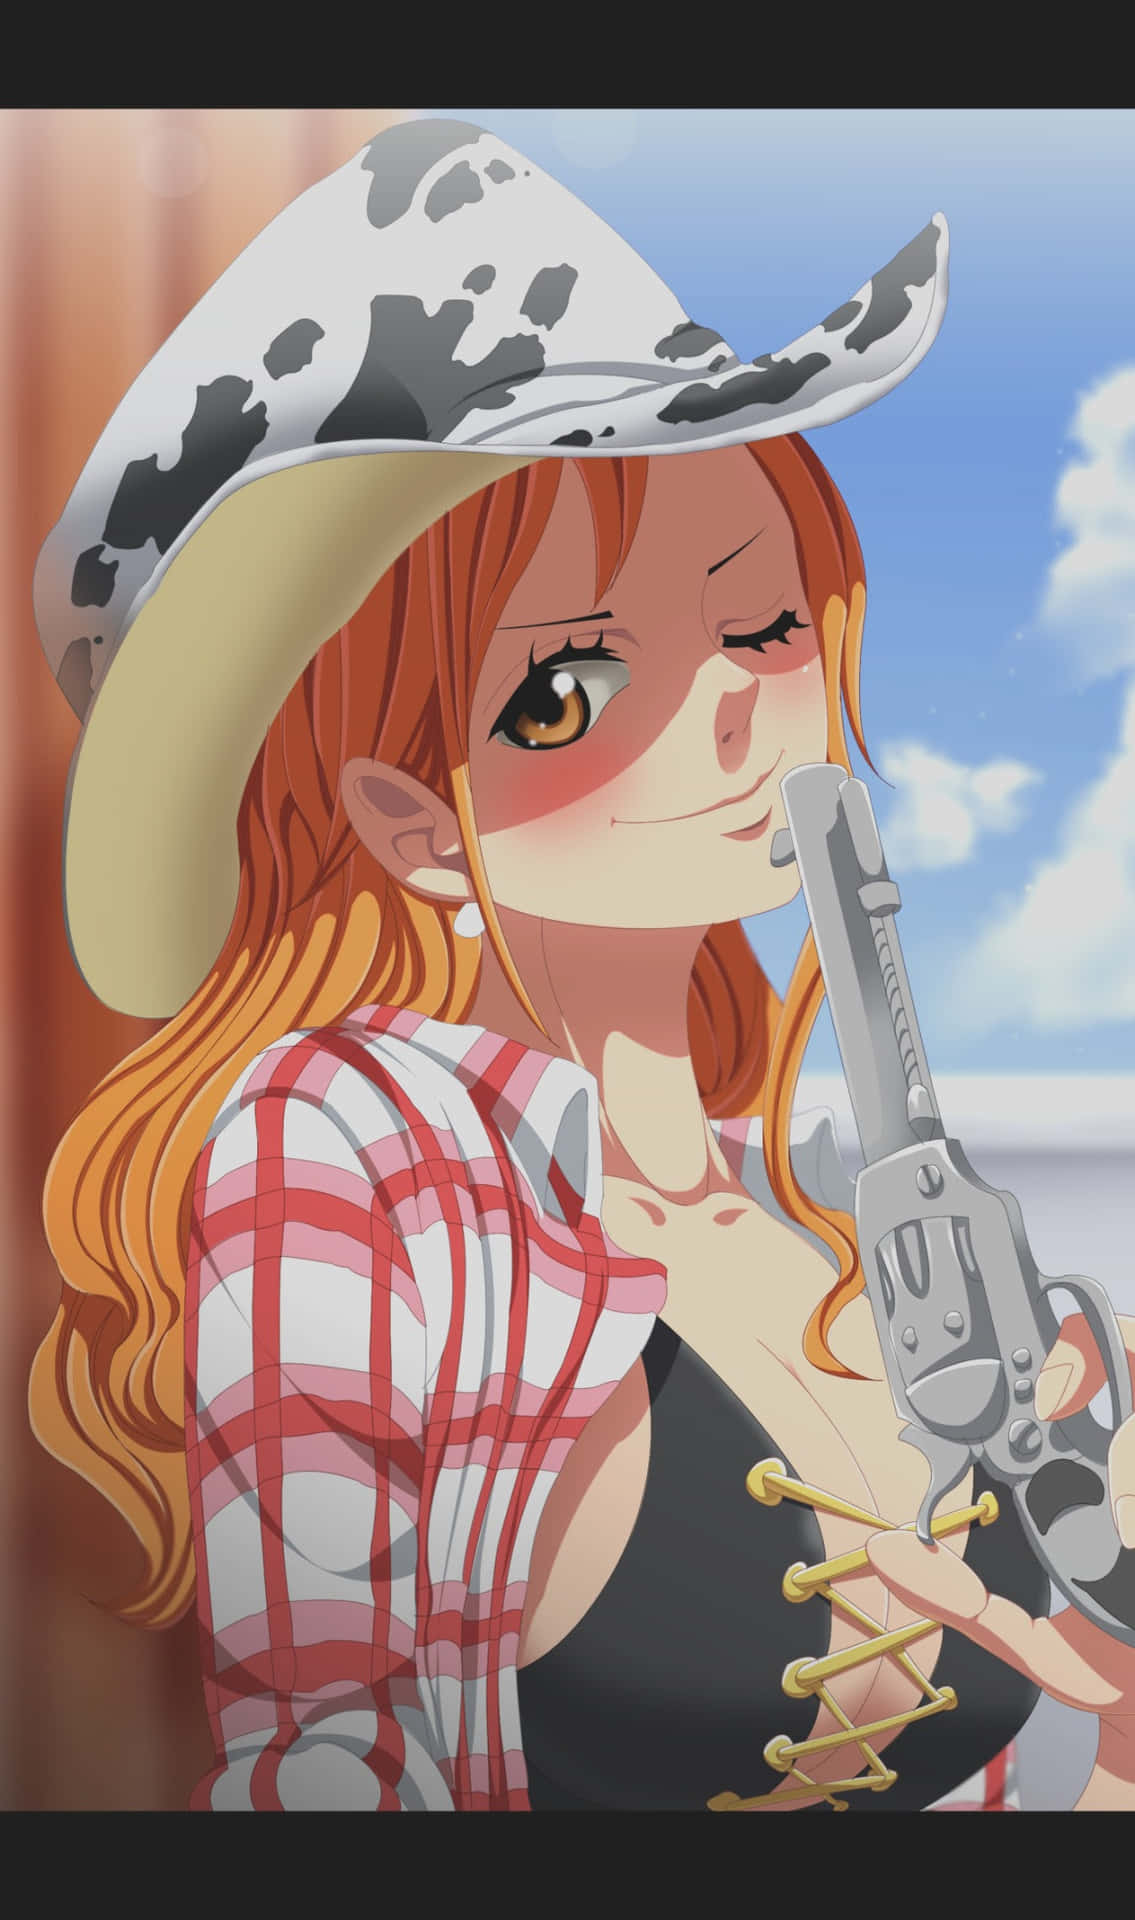 Cowboynami One Piece Anime Can Be Translated To Italian As 